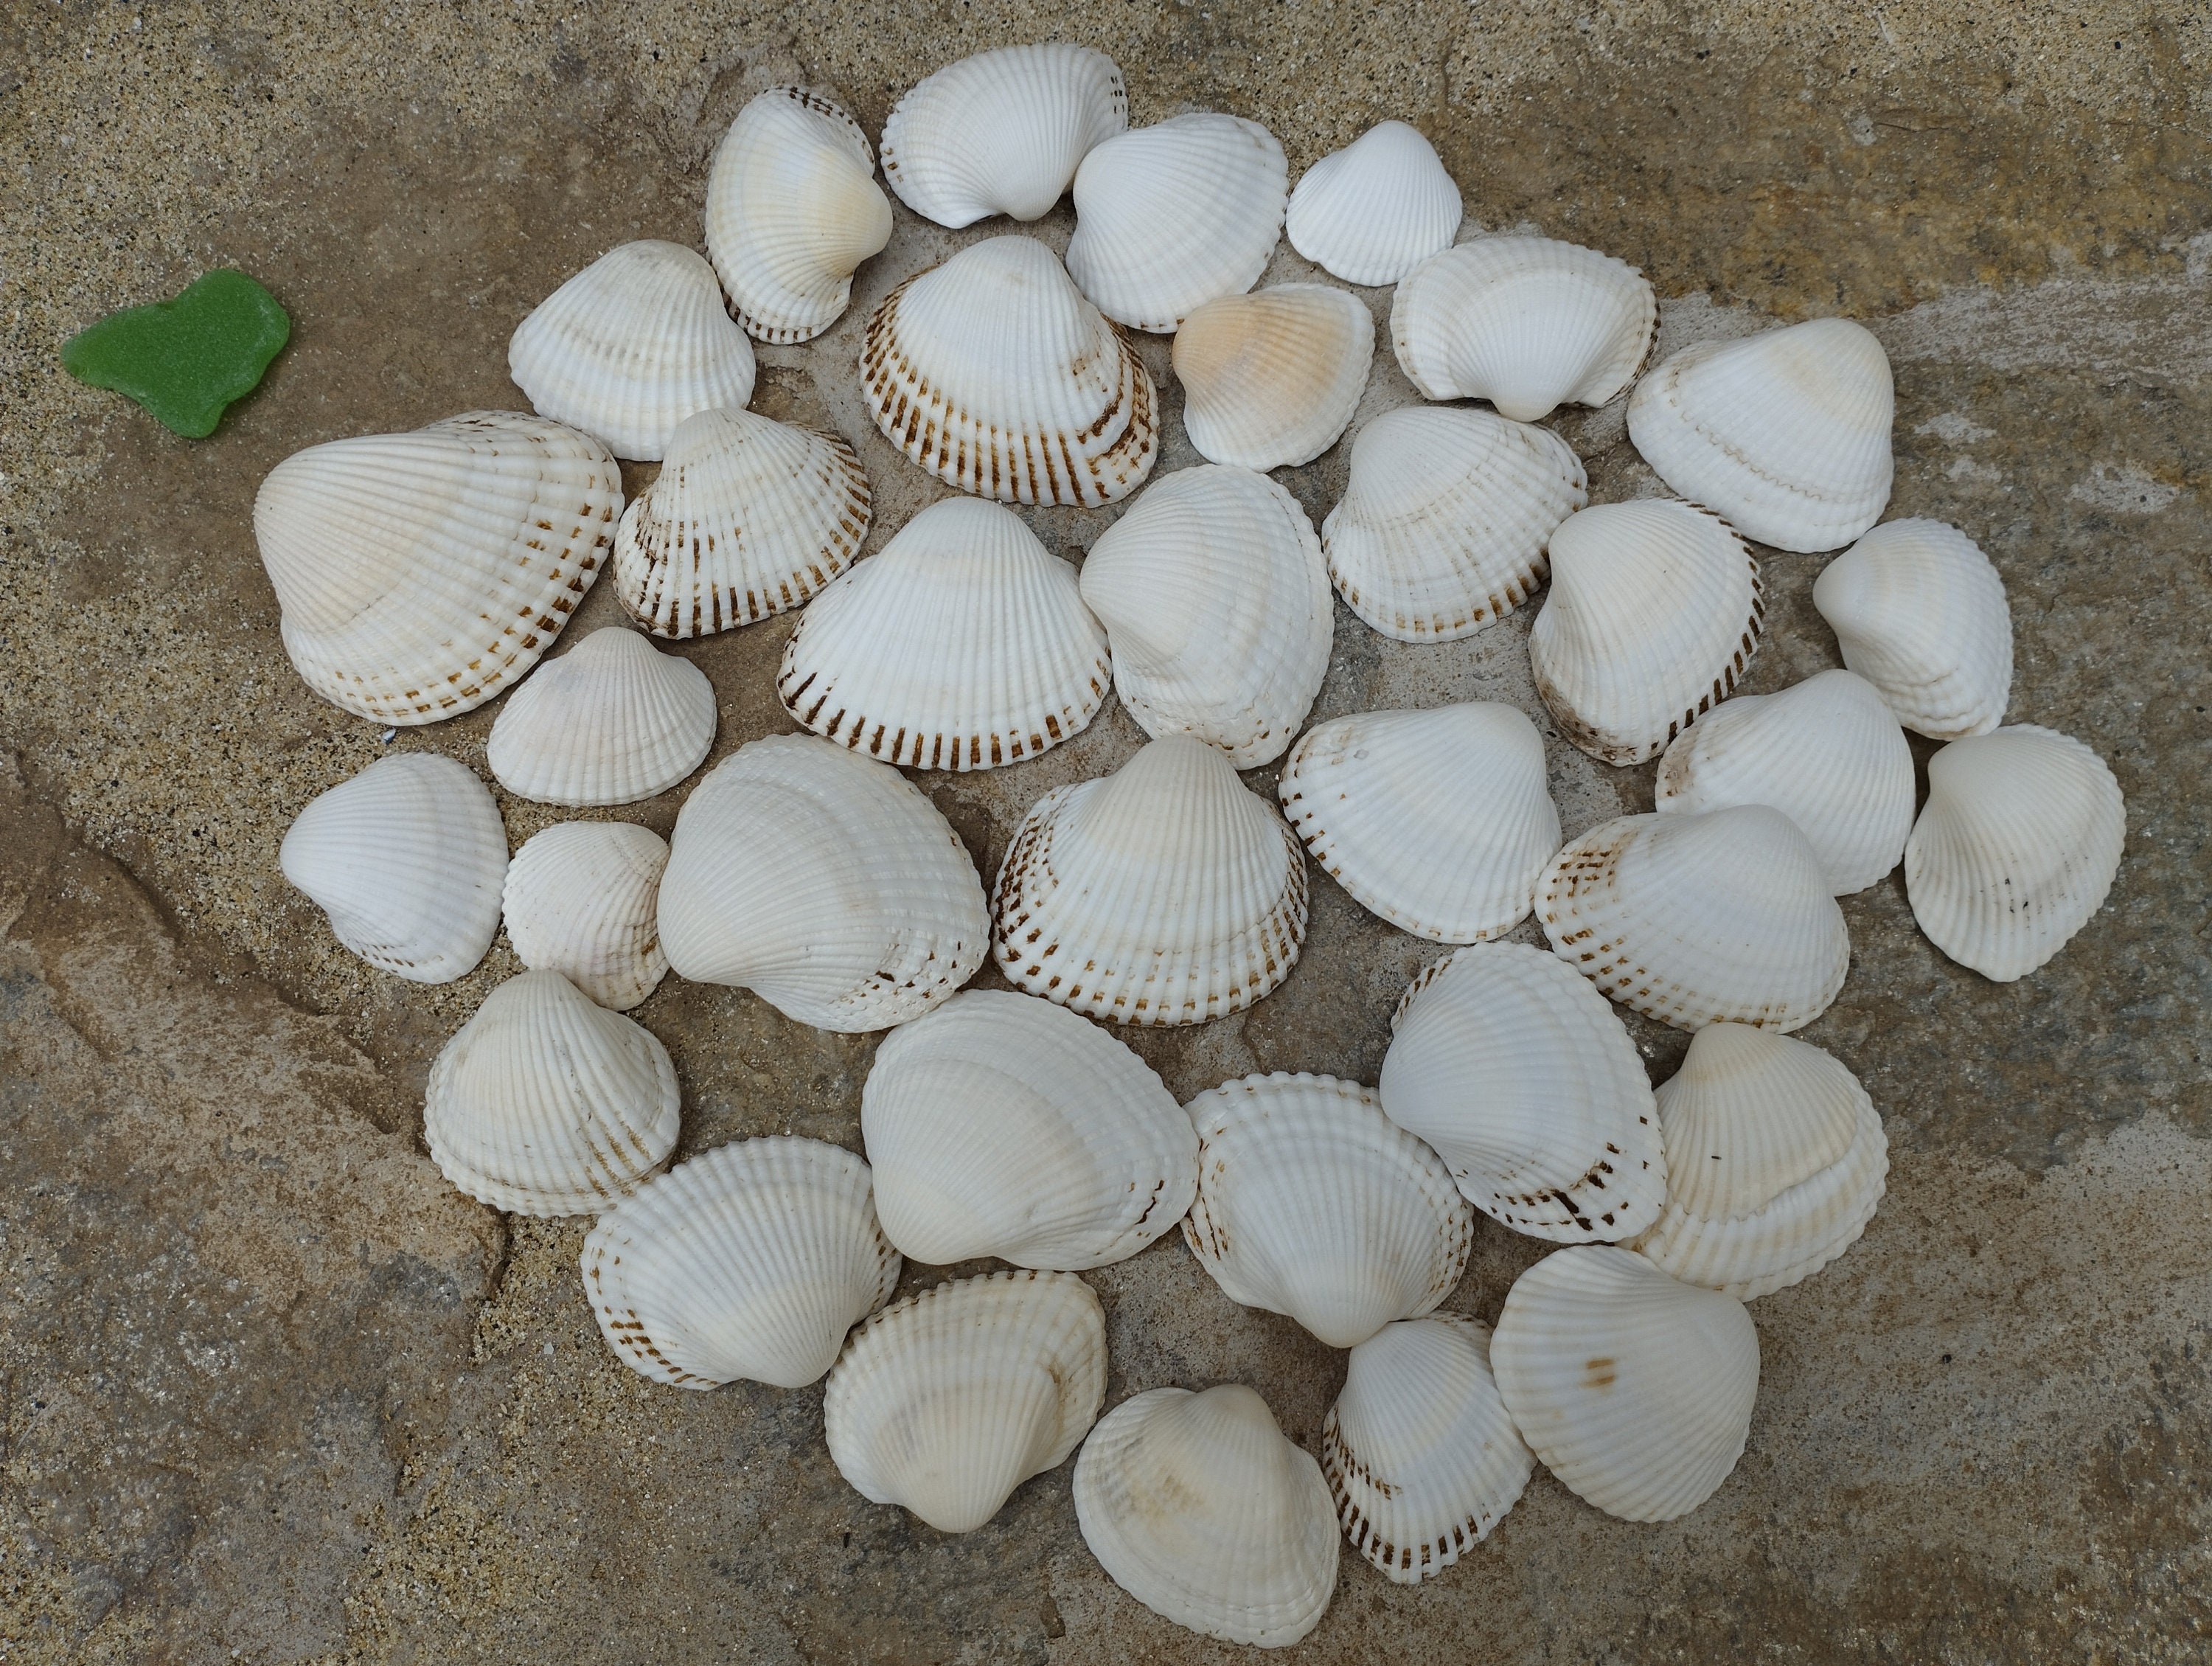 SEAJIAYI 35 Pcs Sea Shells Beach Small White Scallop Shells Seashells White Seashells for Home Decoration, DIY Crafts, Fish Tank and Vase Filler